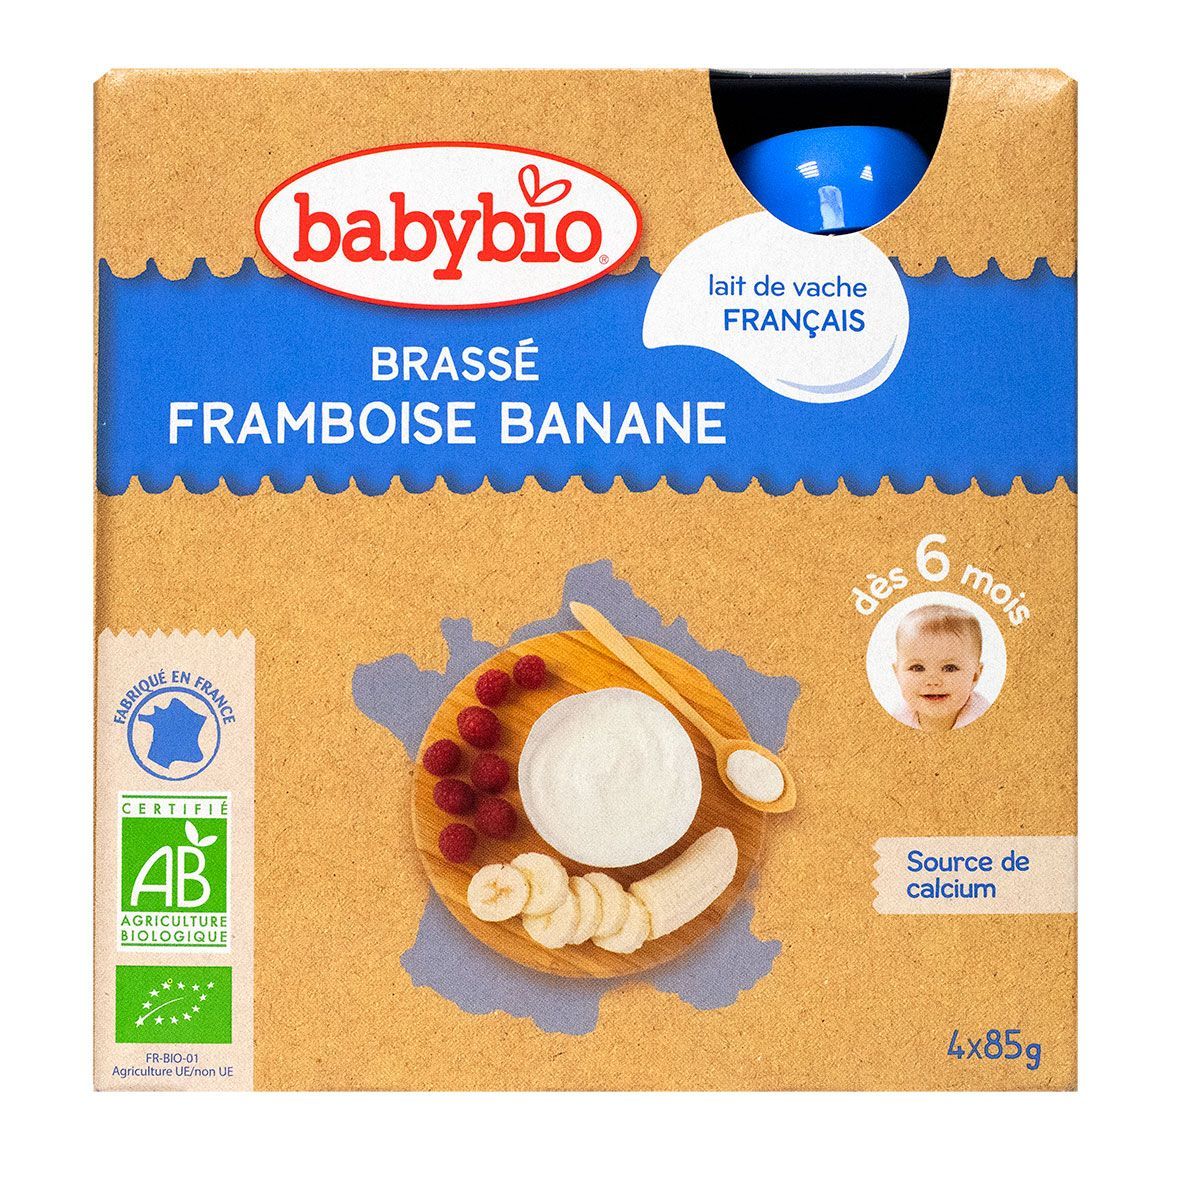 Babybio Gourdes Pomme Orange Banane - Compote bébé Bio